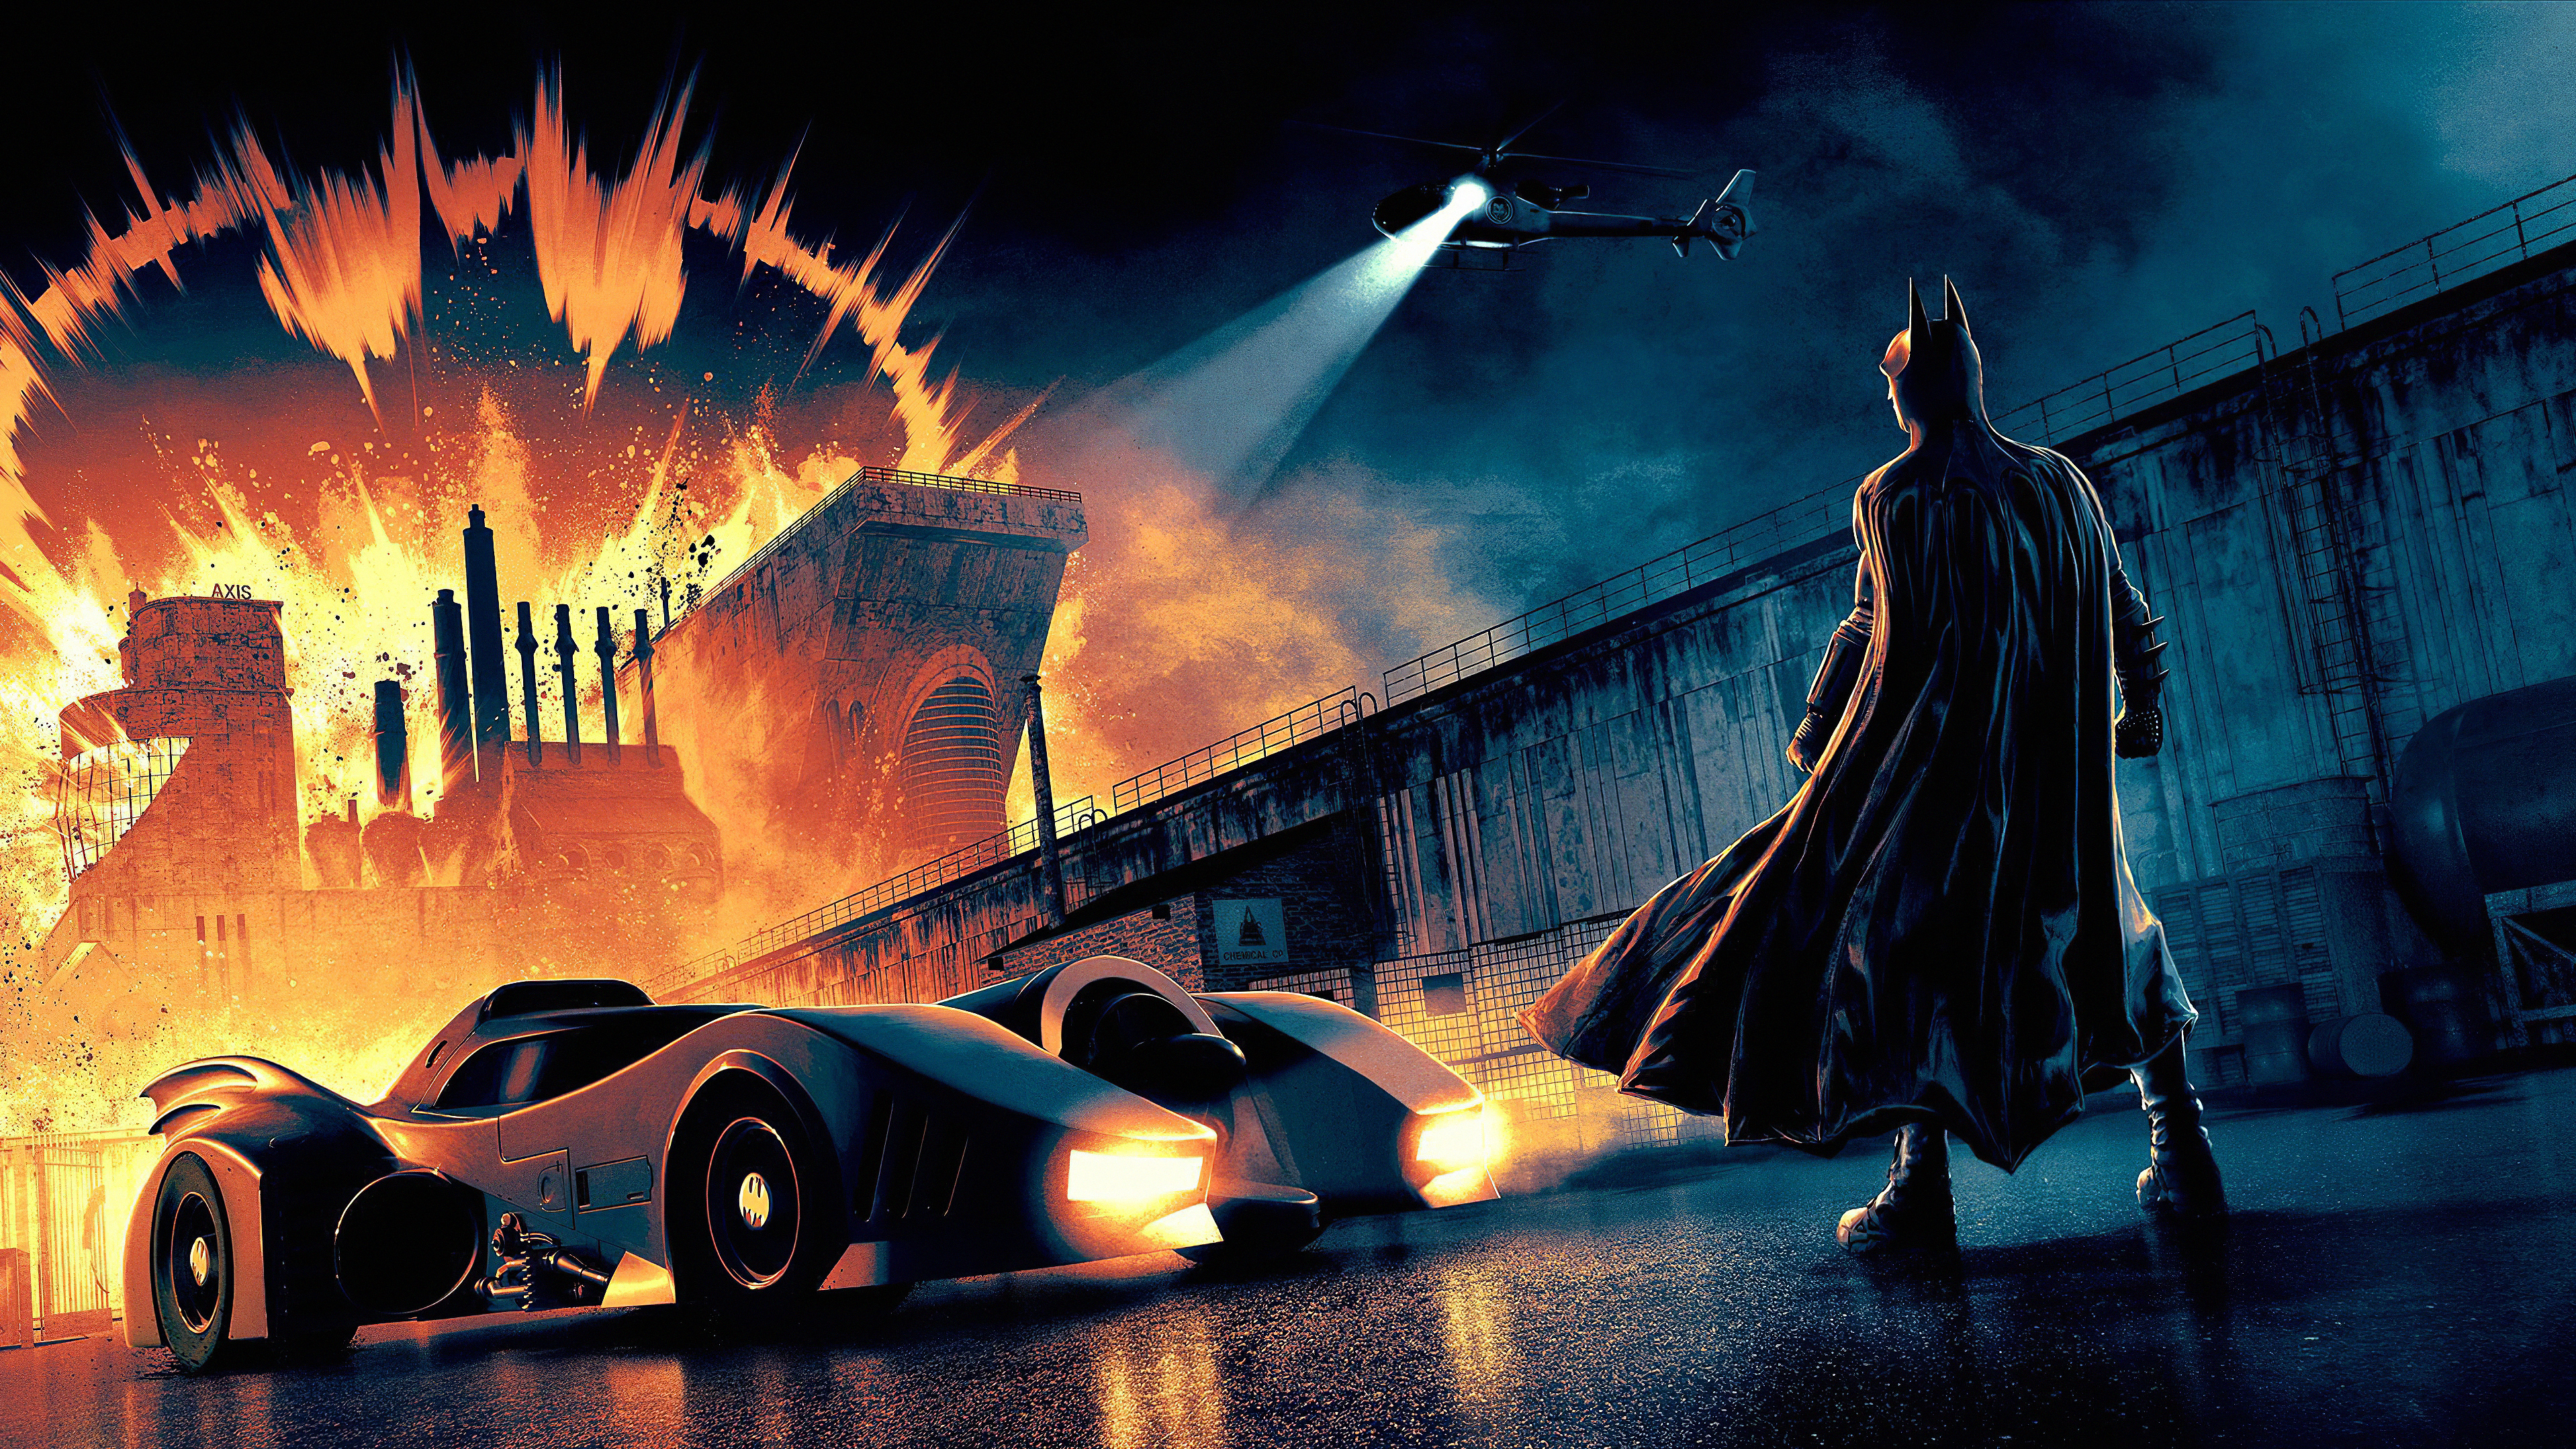 Batman 4k Batmobile, HD Superheroes, 4k Wallpapers, Images, Backgrounds